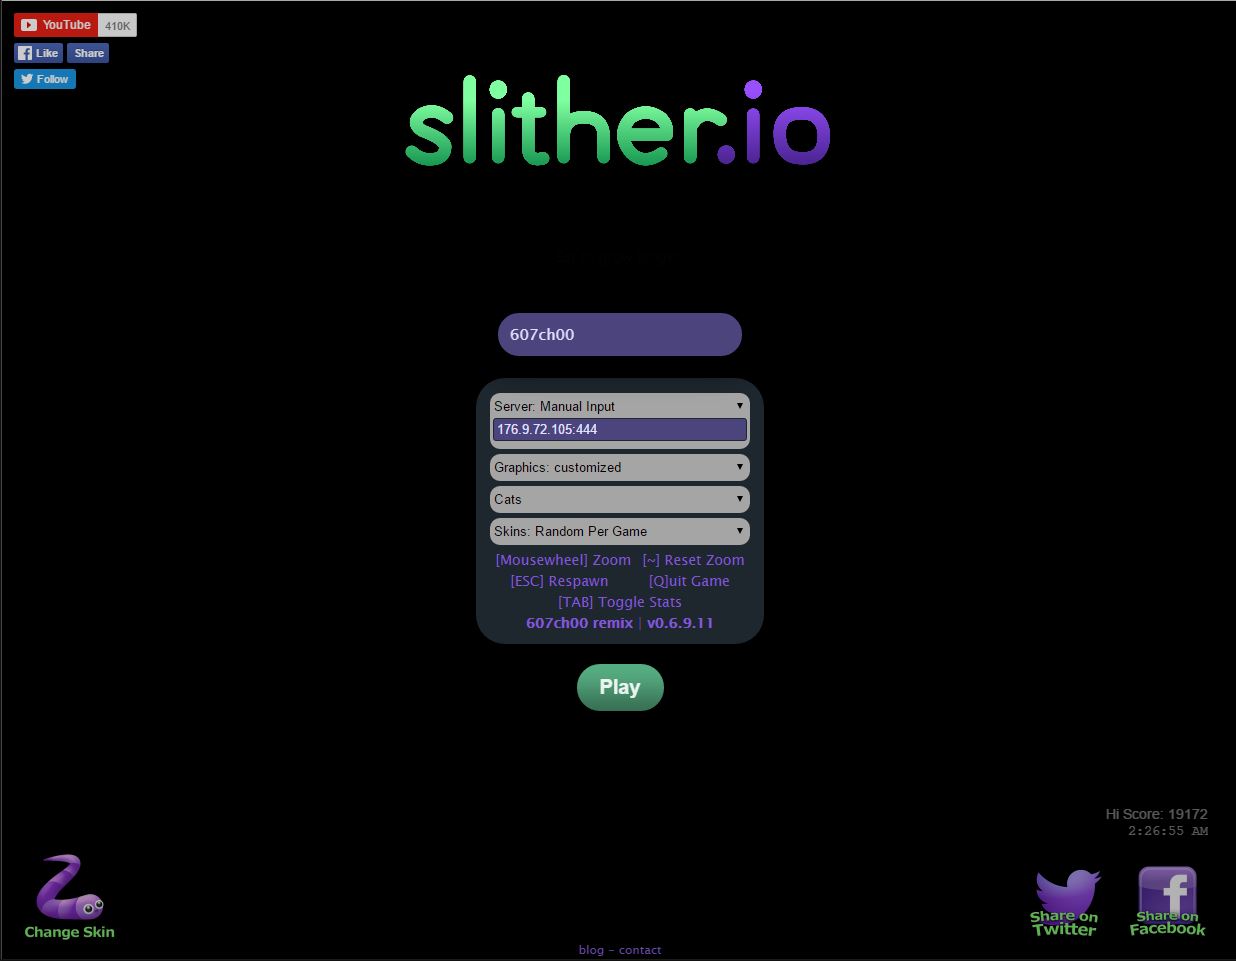 Slither.io - 607ch00 remix